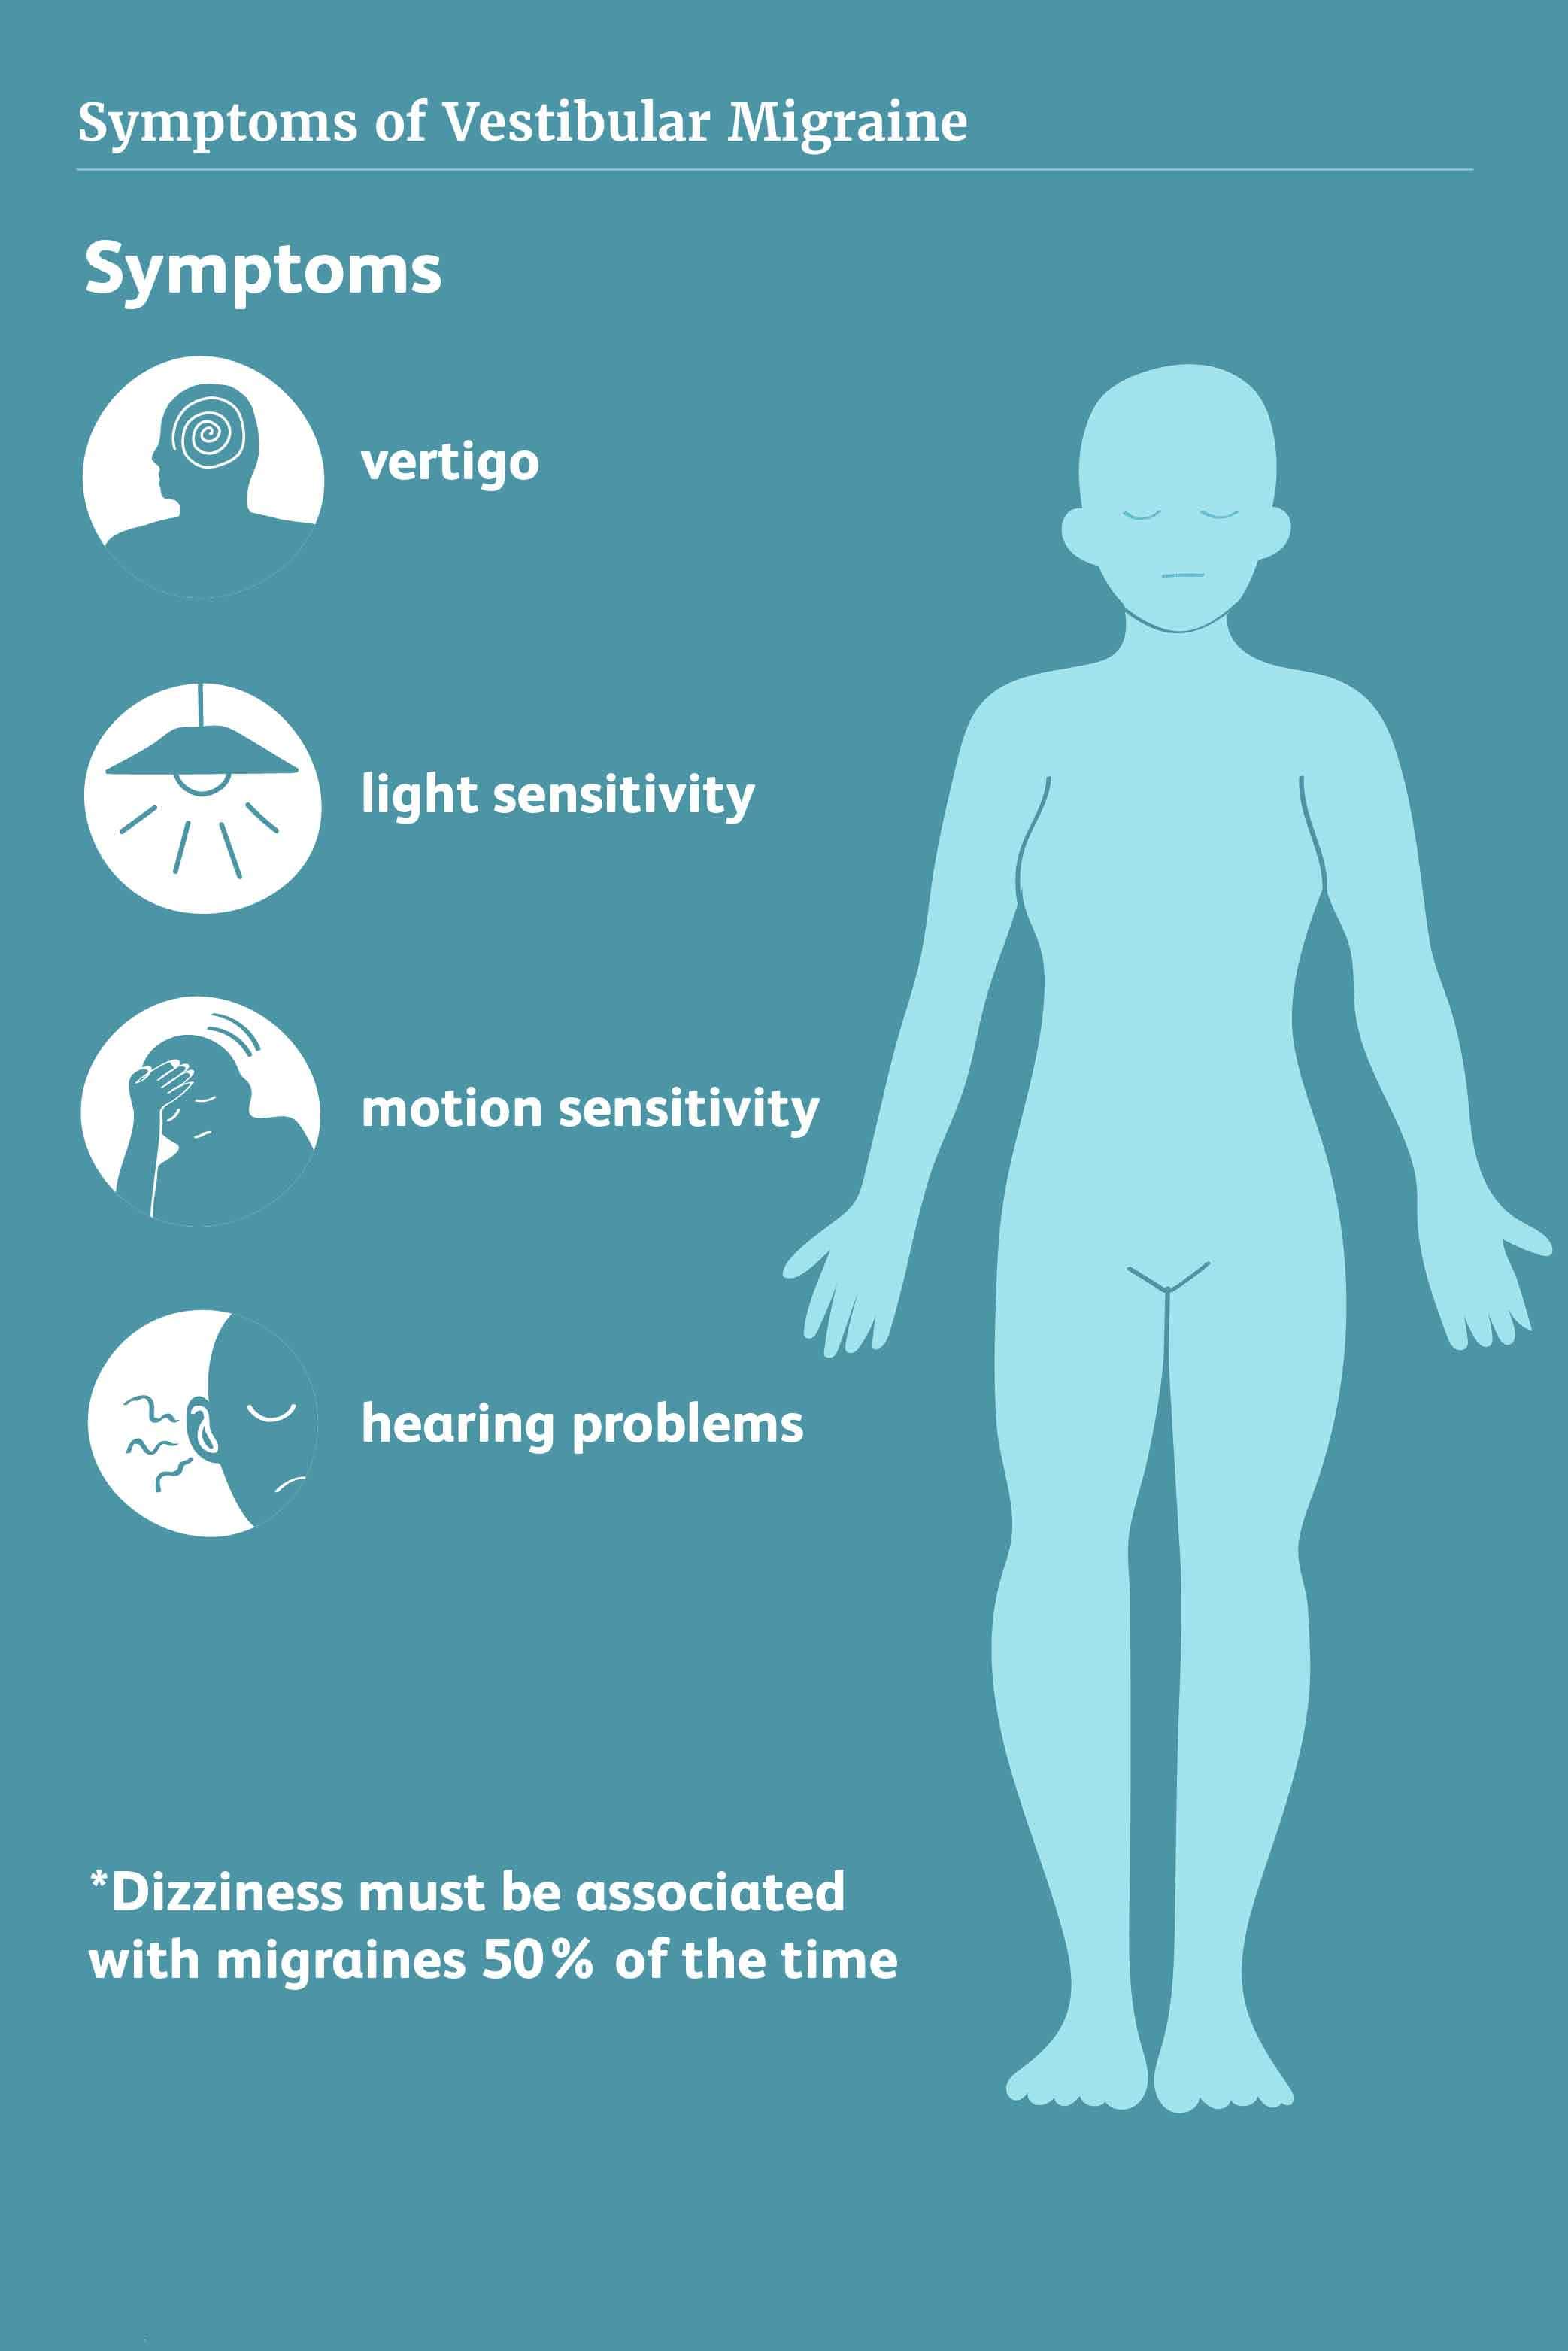 Symptoms of Vestibular Migraines